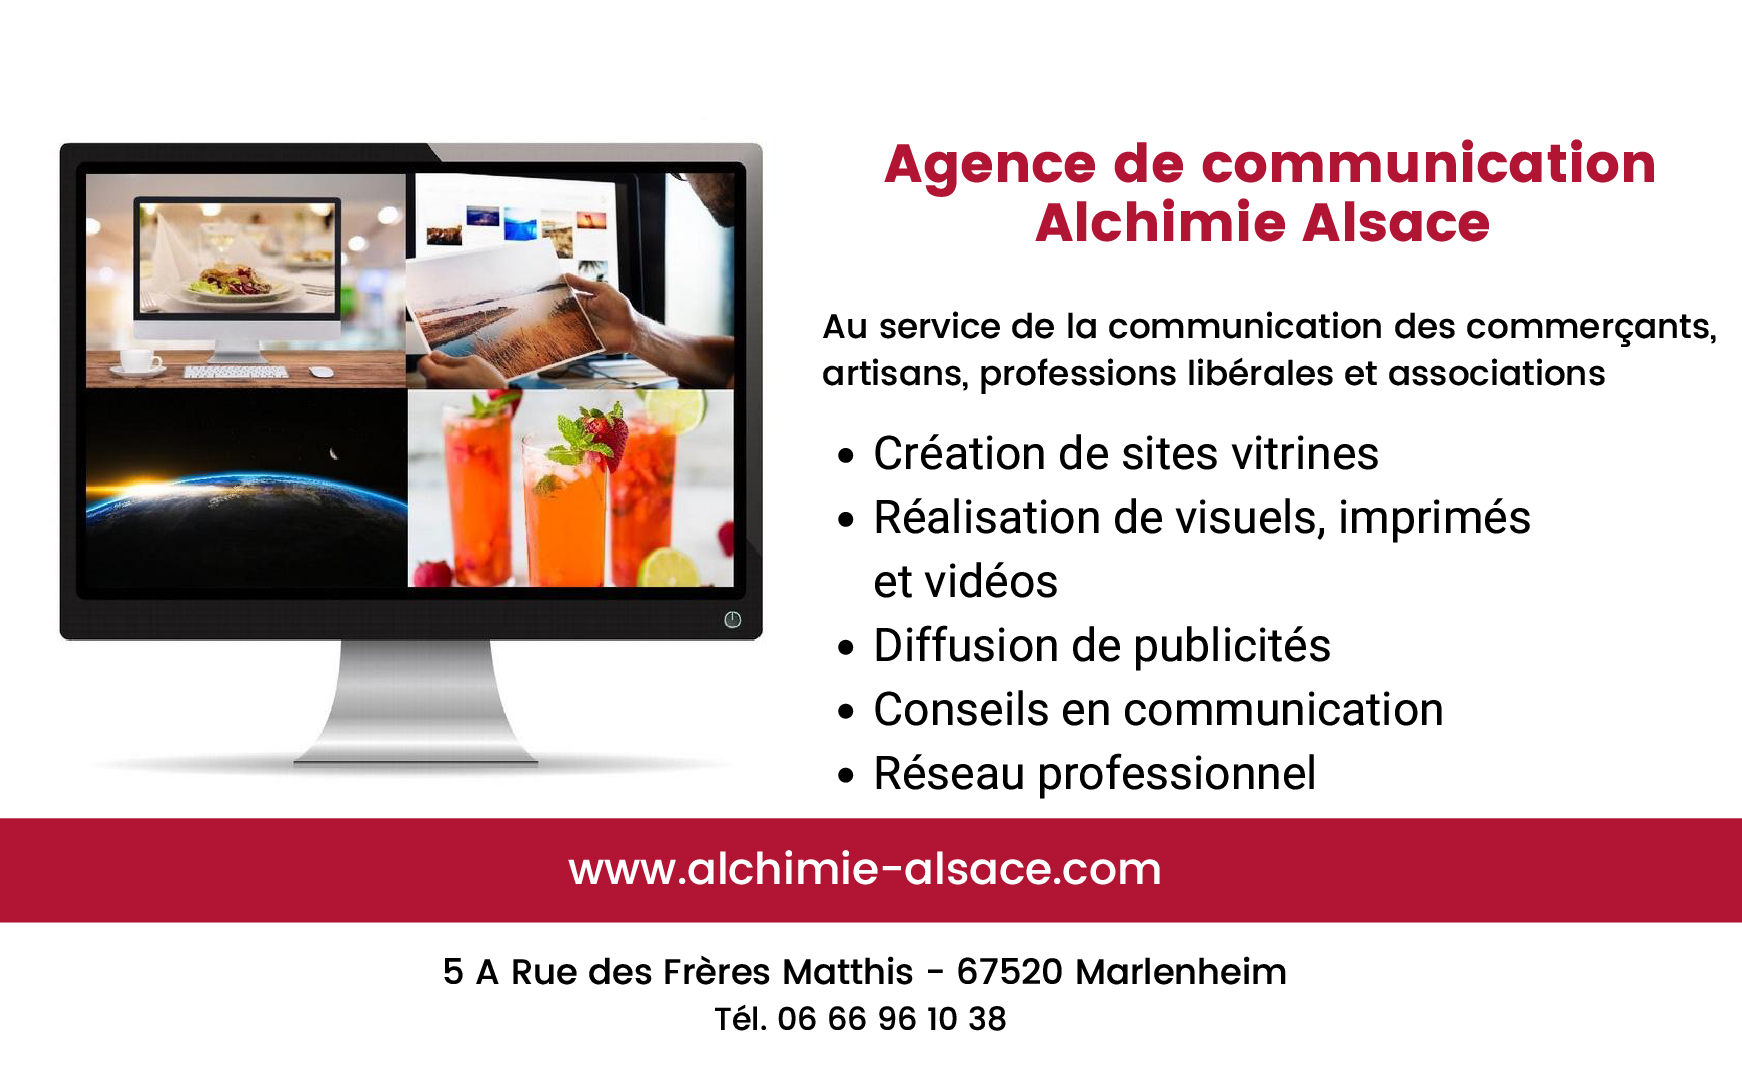 (c) Alchimie-alsace.com